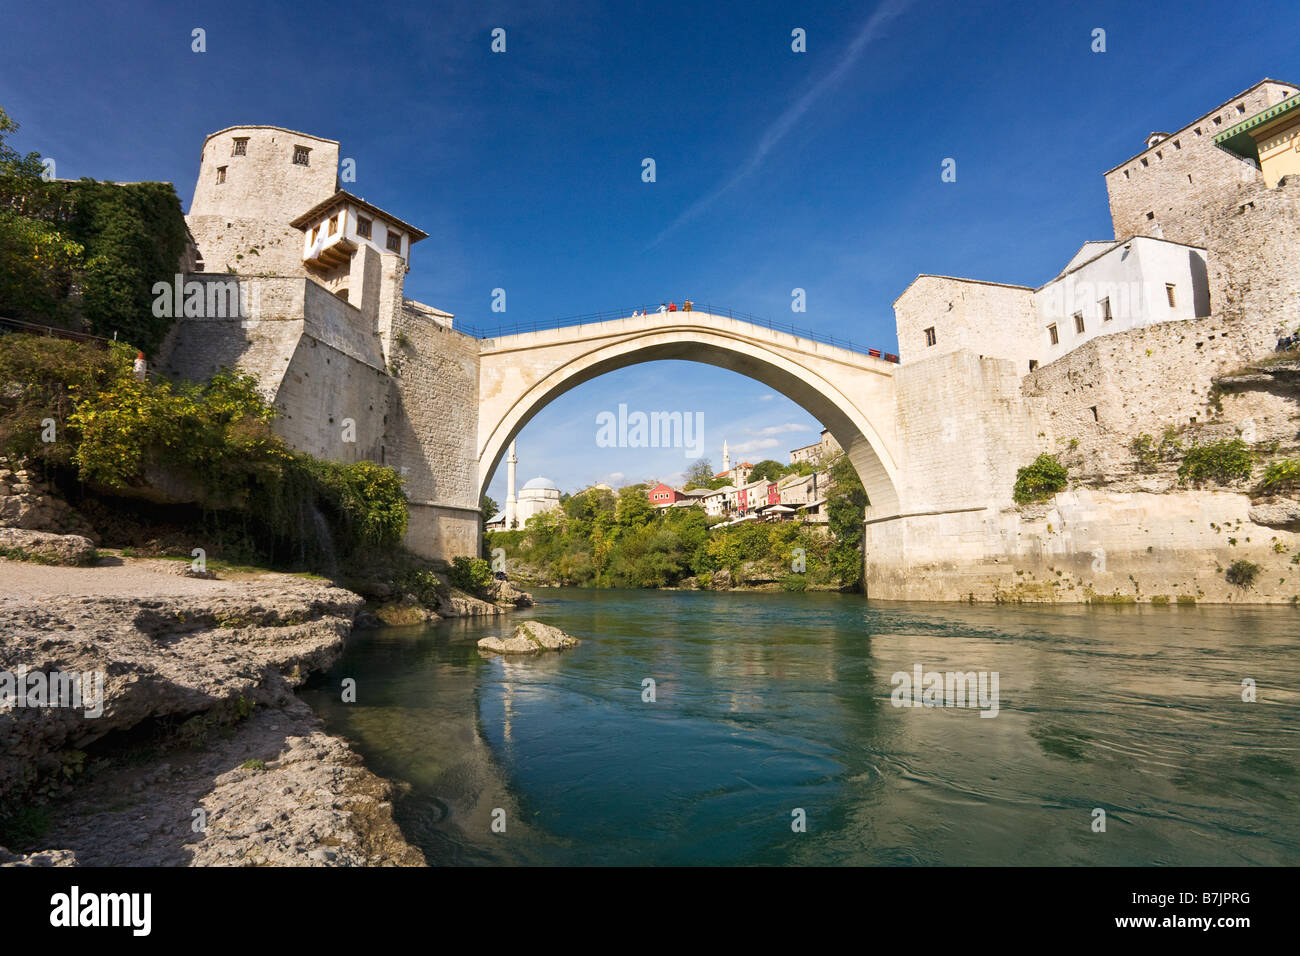 Historic Old Town of Mostar and restored 16th century bridge across the Neretva River in Bosnia Herzegovina Europe Stock Photo